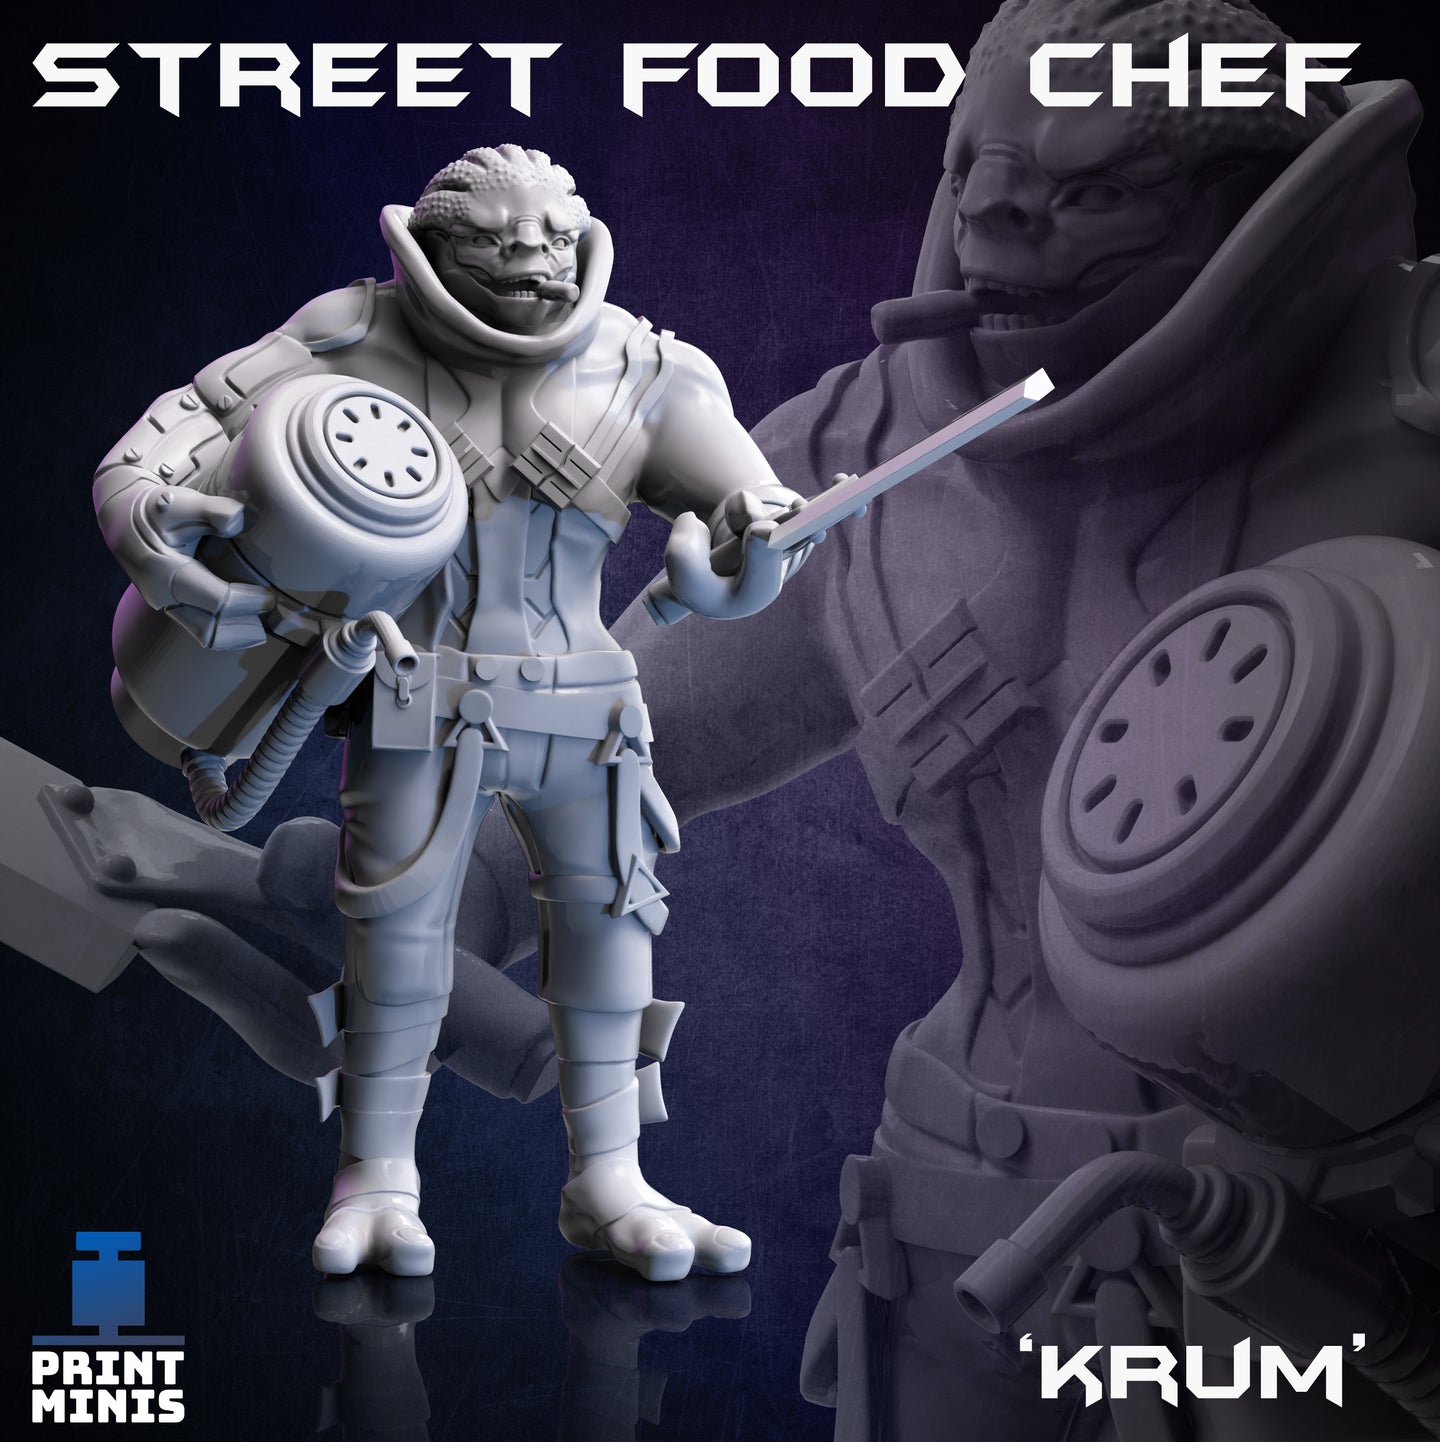 Krum - Alien Food Vendor - Night Market - Print Minis - Wargaming D&D DnD